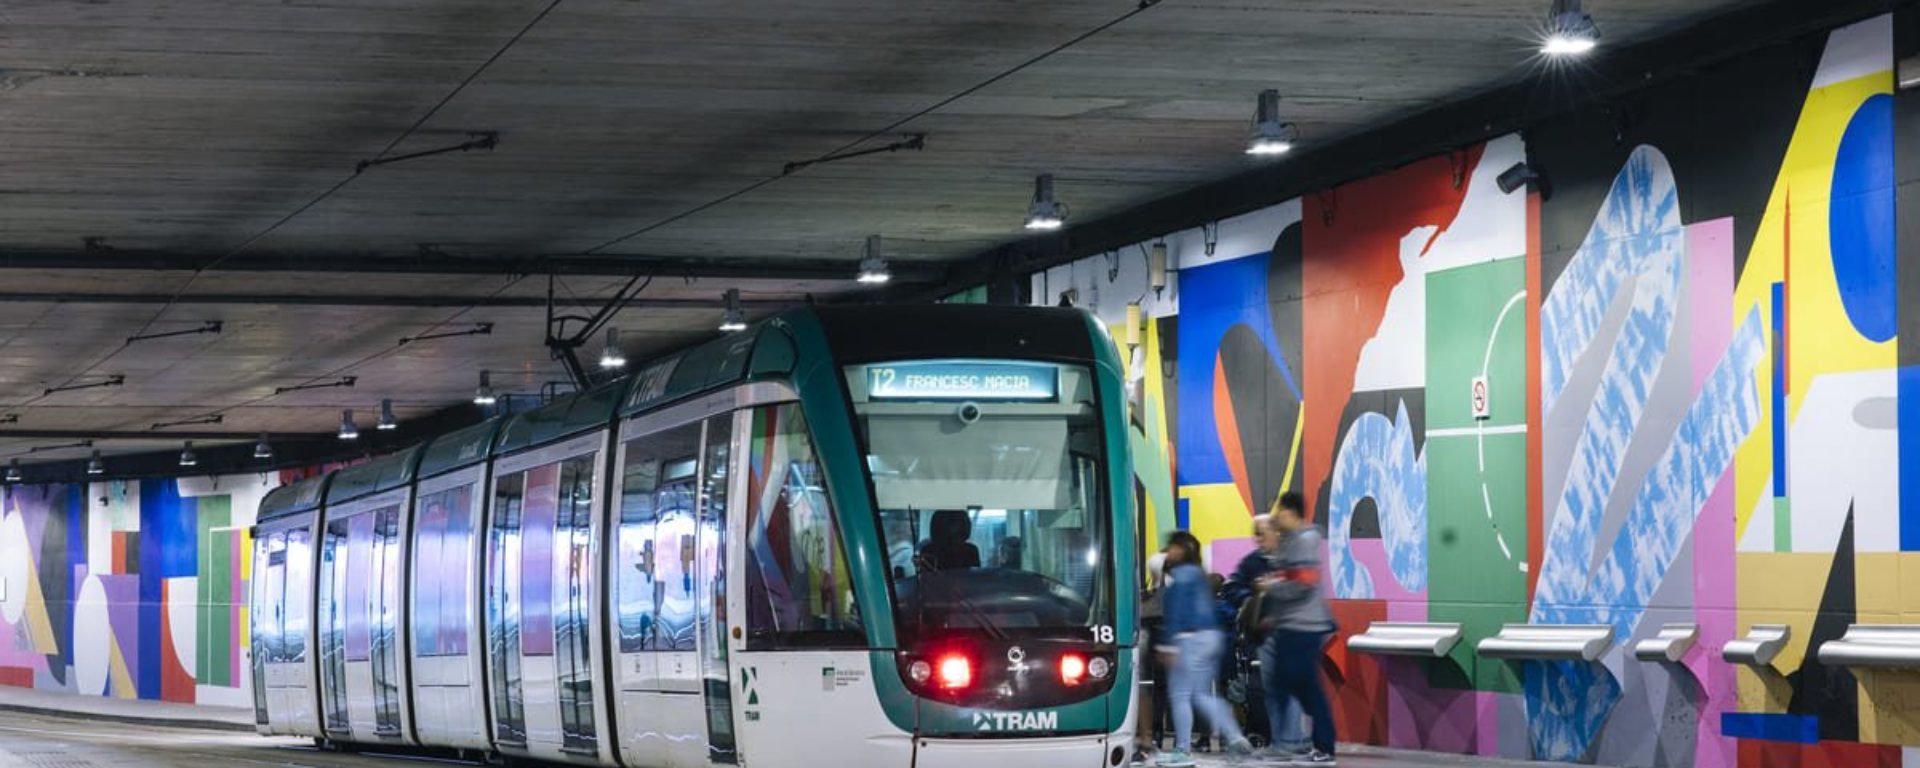 tram-mural-art-photo-by-rebobinart